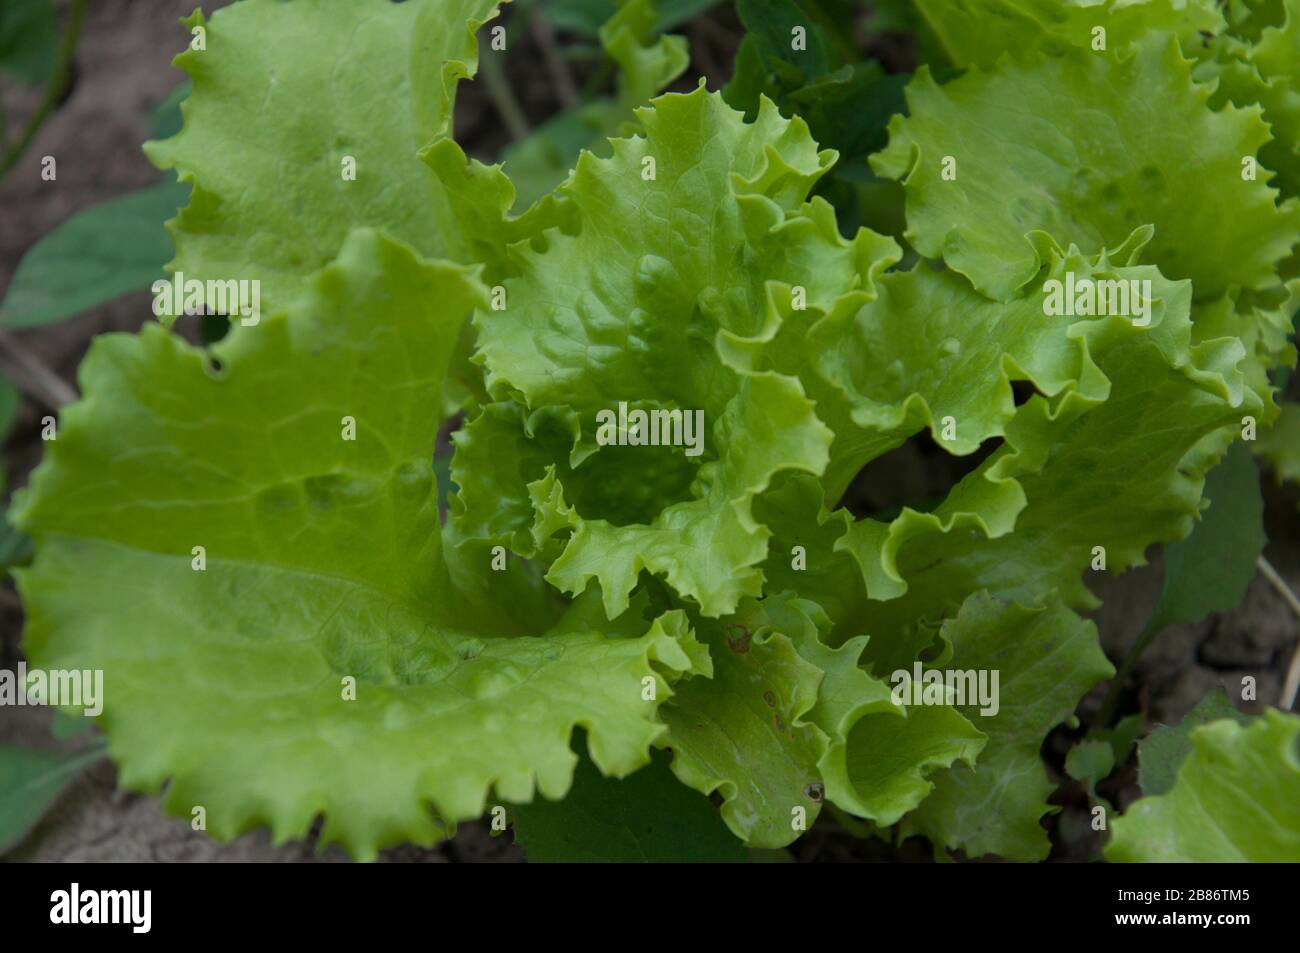 A green lush foliage of lettuce plant salad. Stock Photo